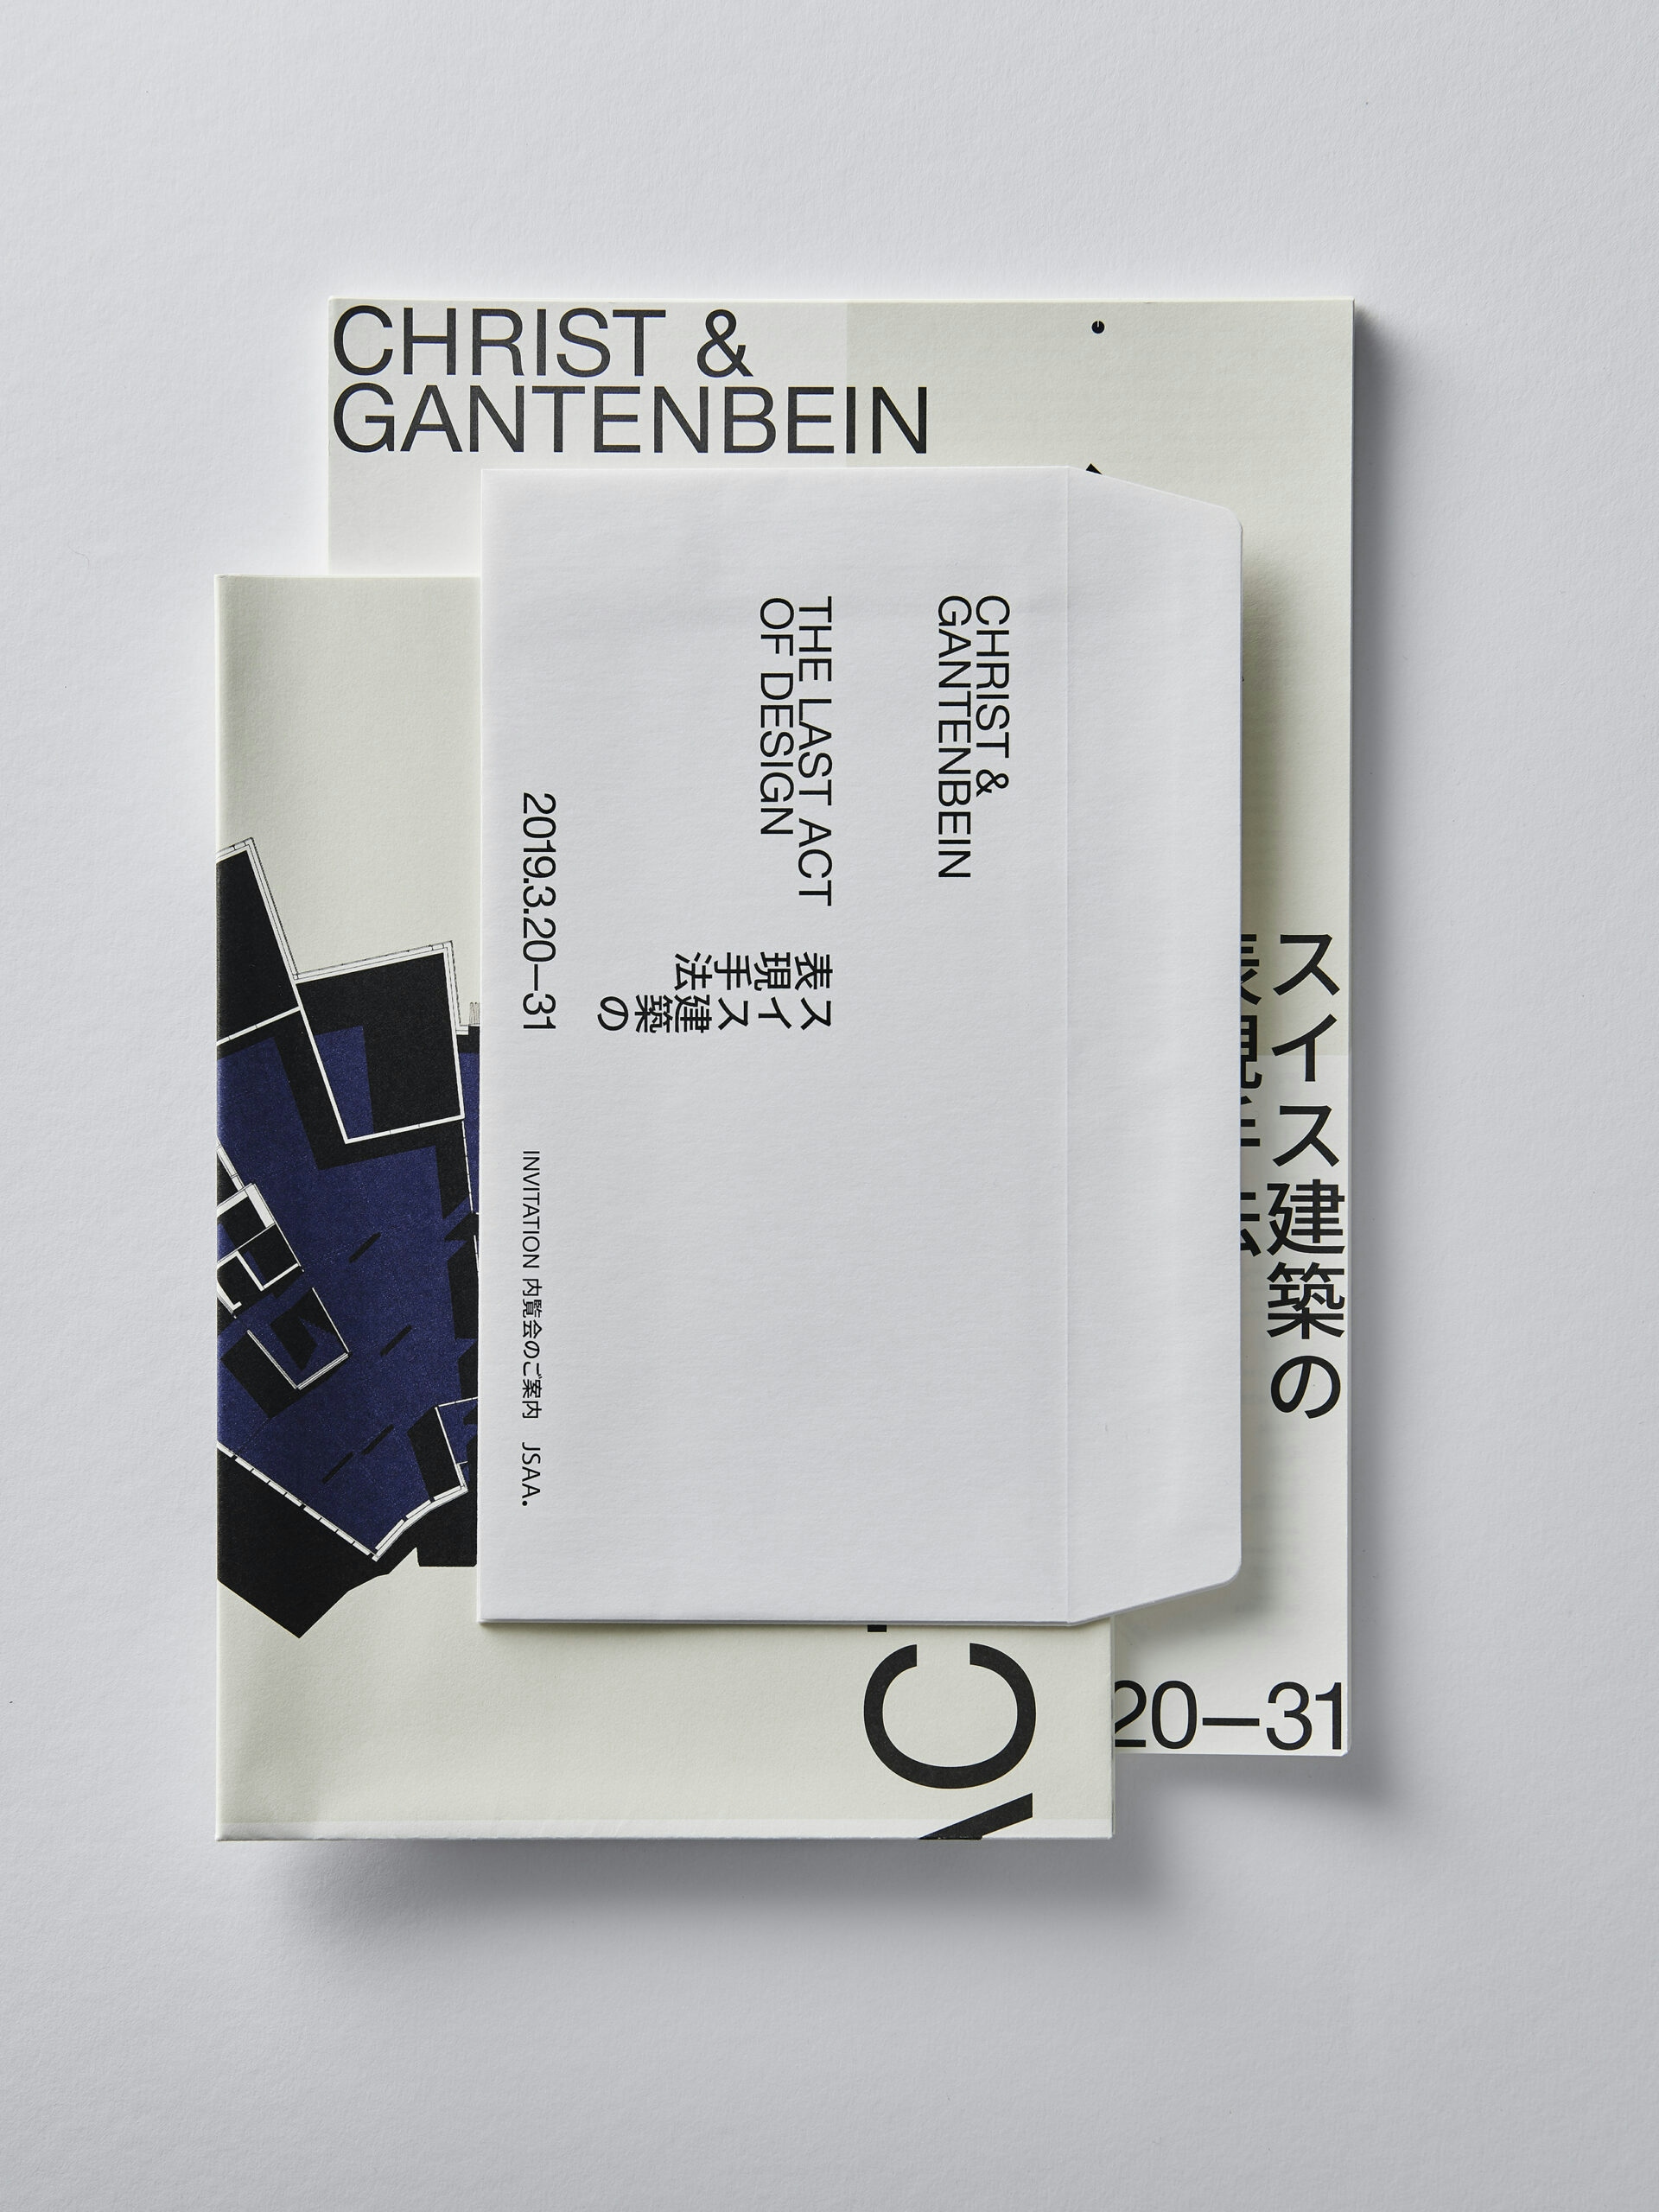 Christ & Gantenbein – The Last Act of Design communication overview